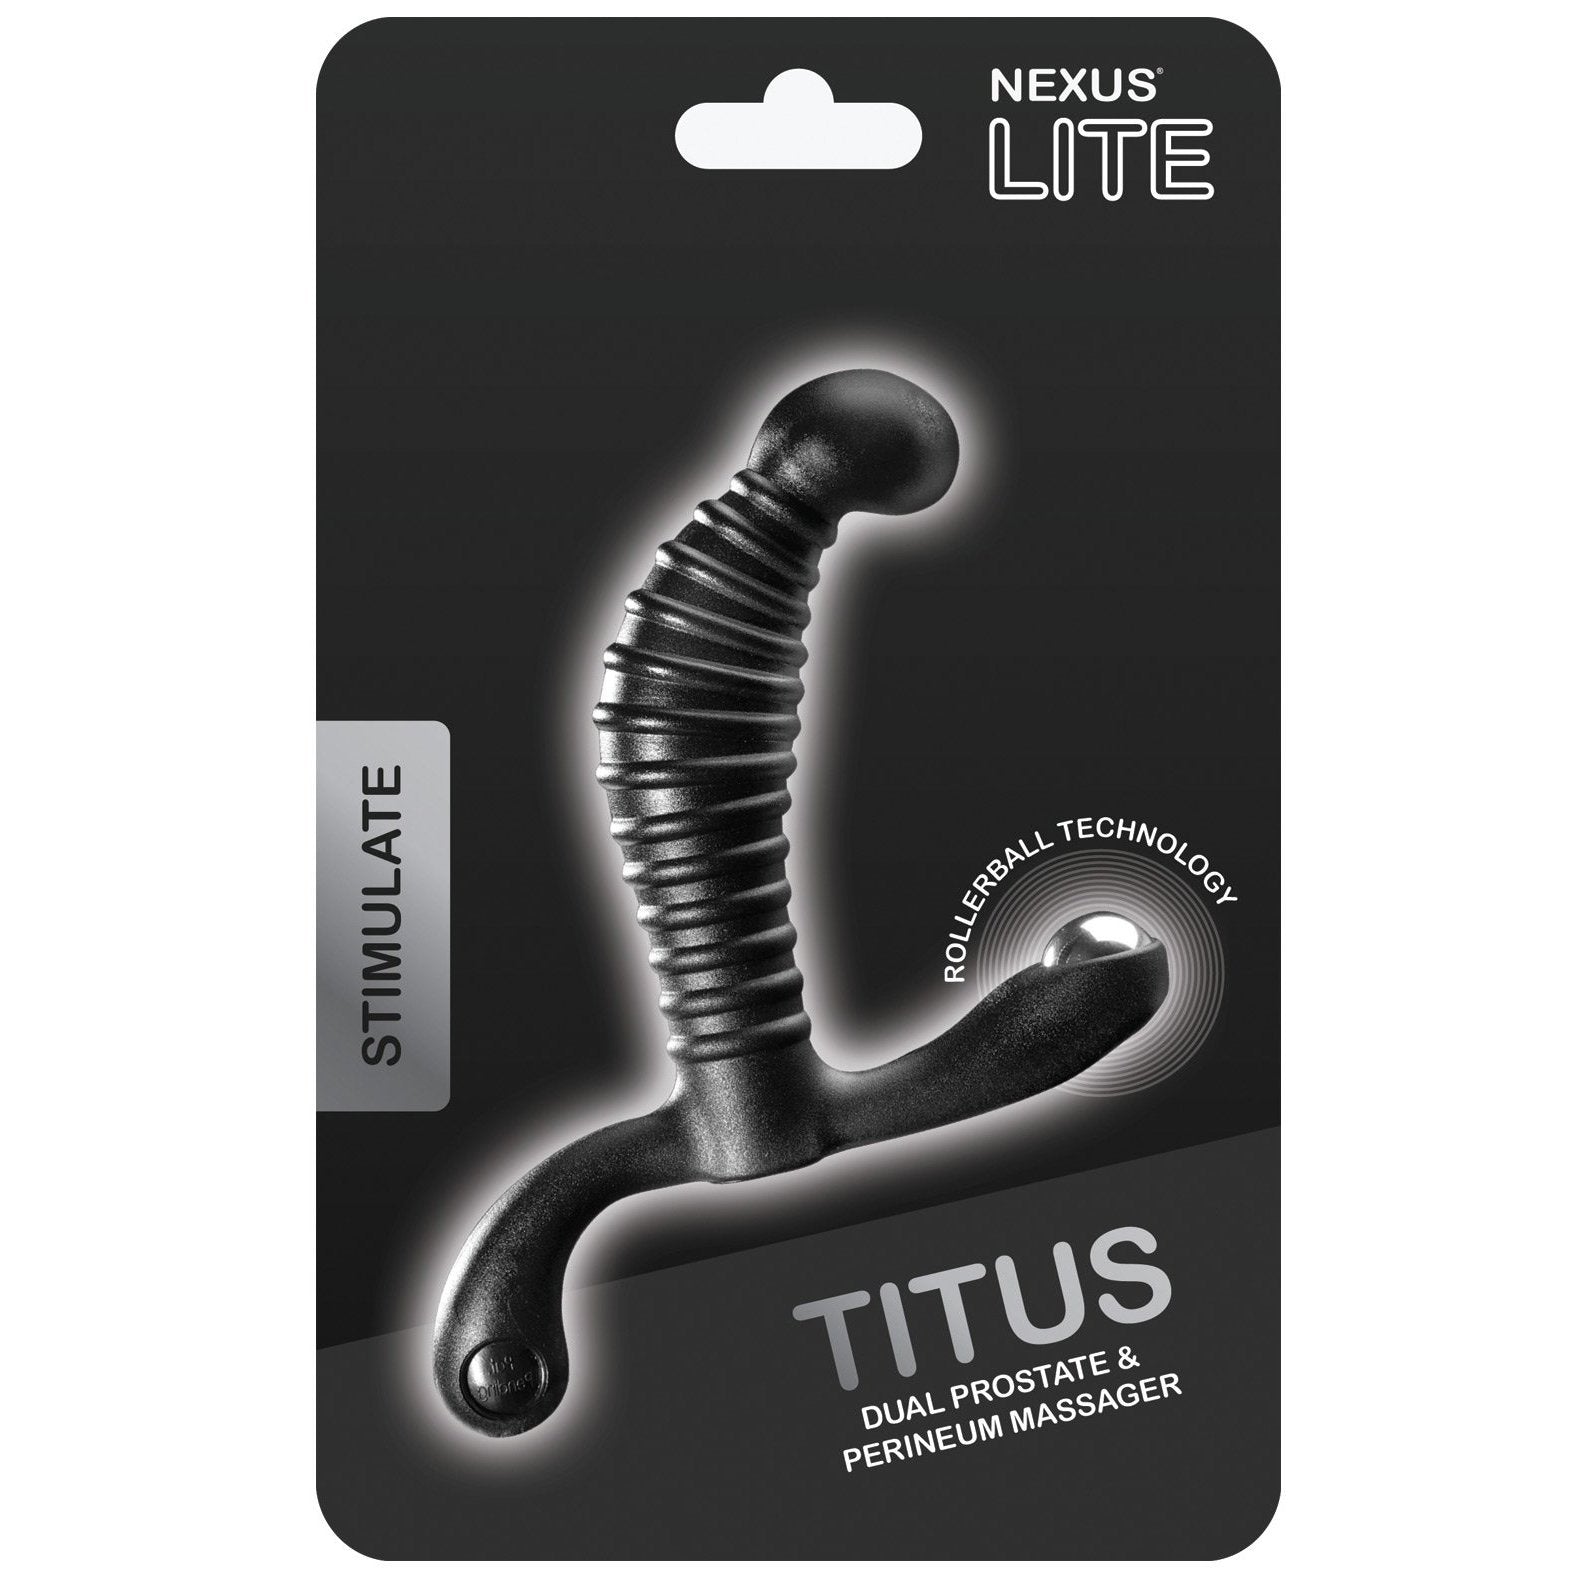 Nexus Titus Prostate Massager